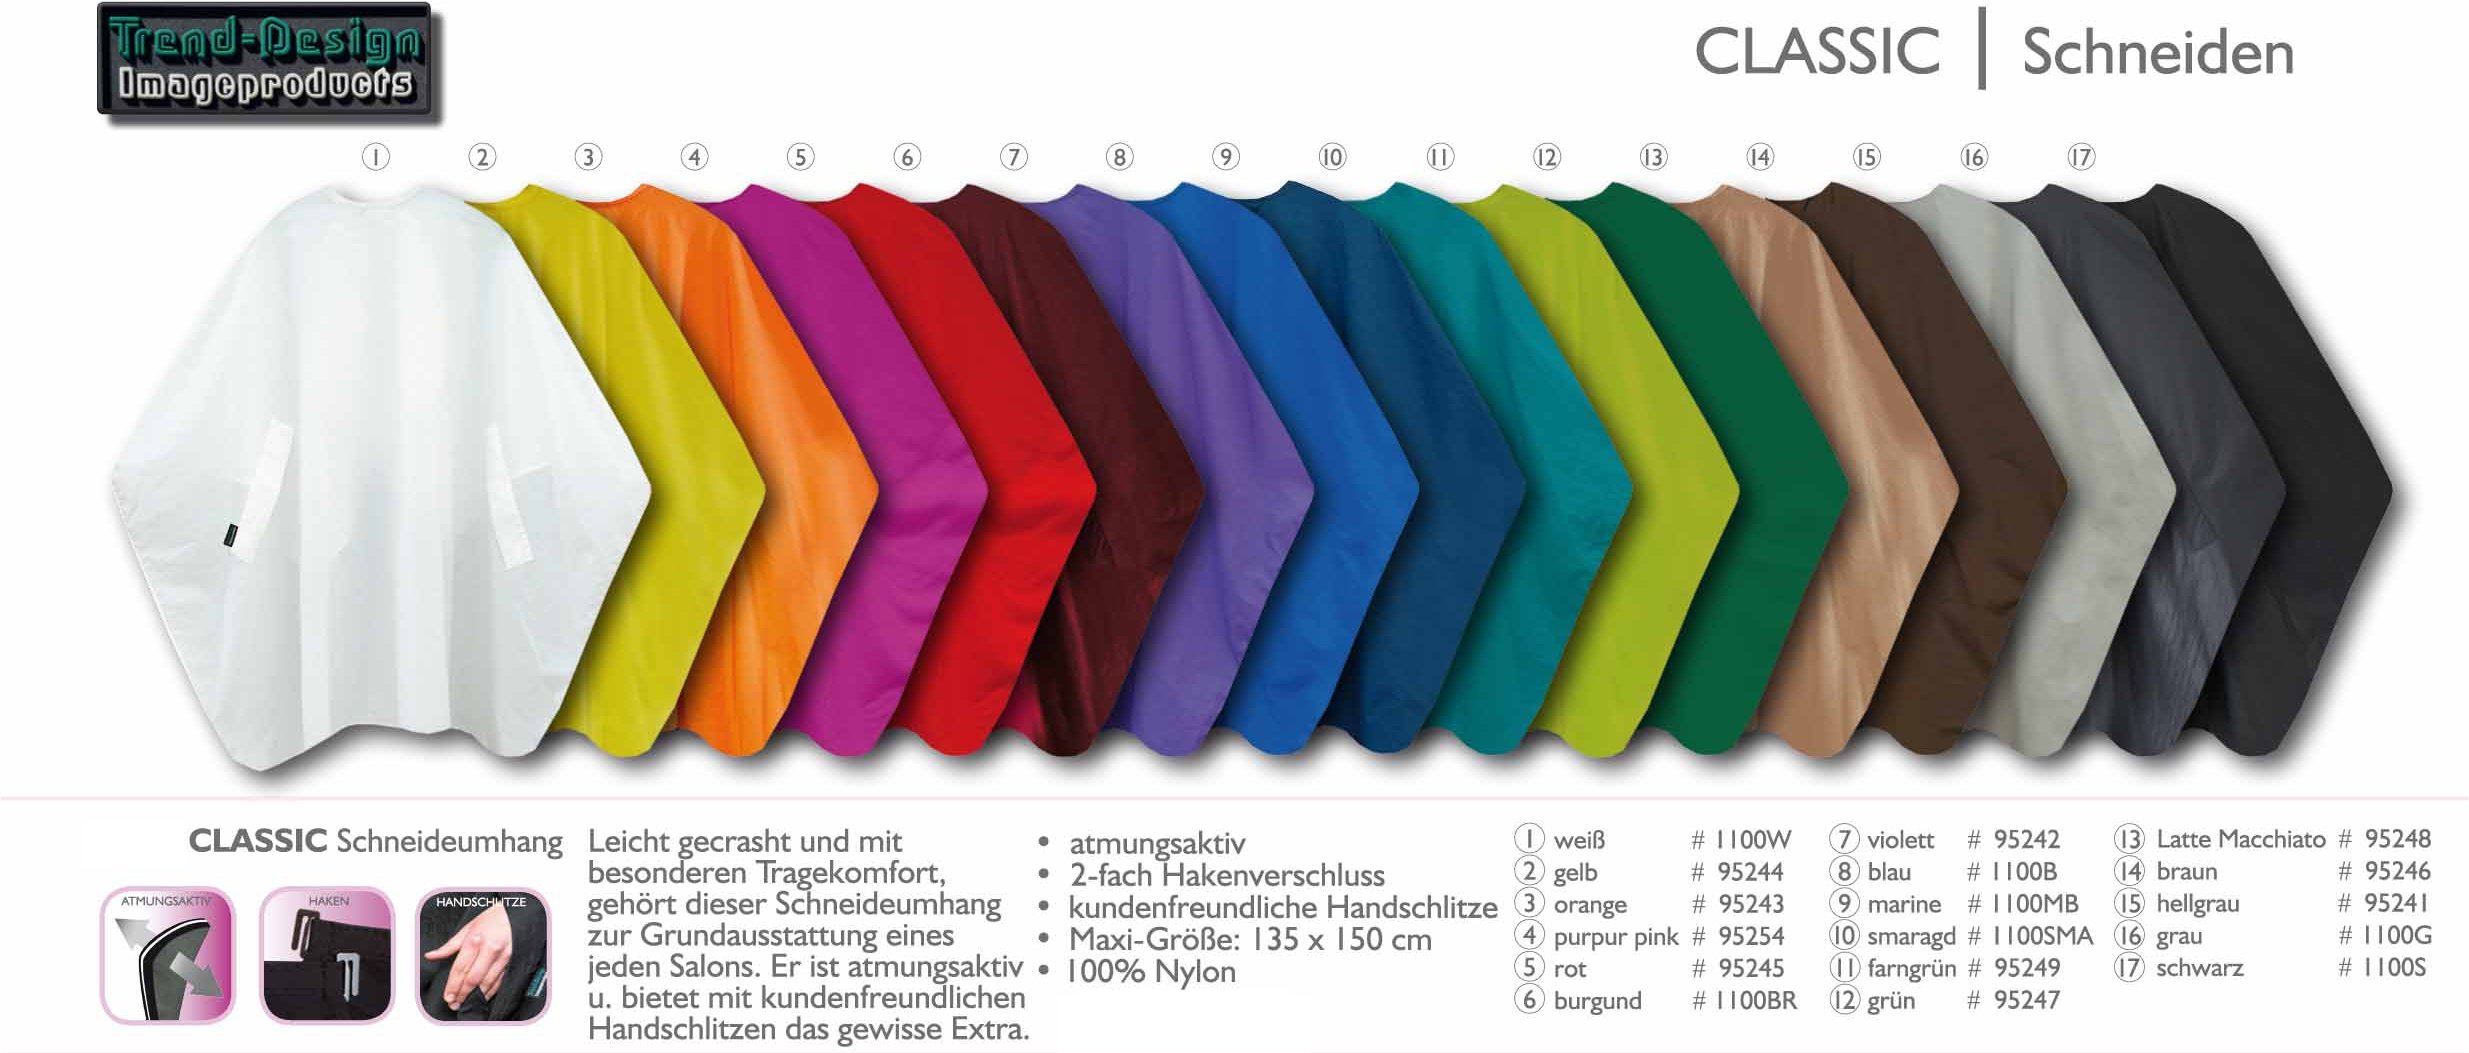 Schneideumhang Classic Farbübersicht Umhangfarben Palette.jpg